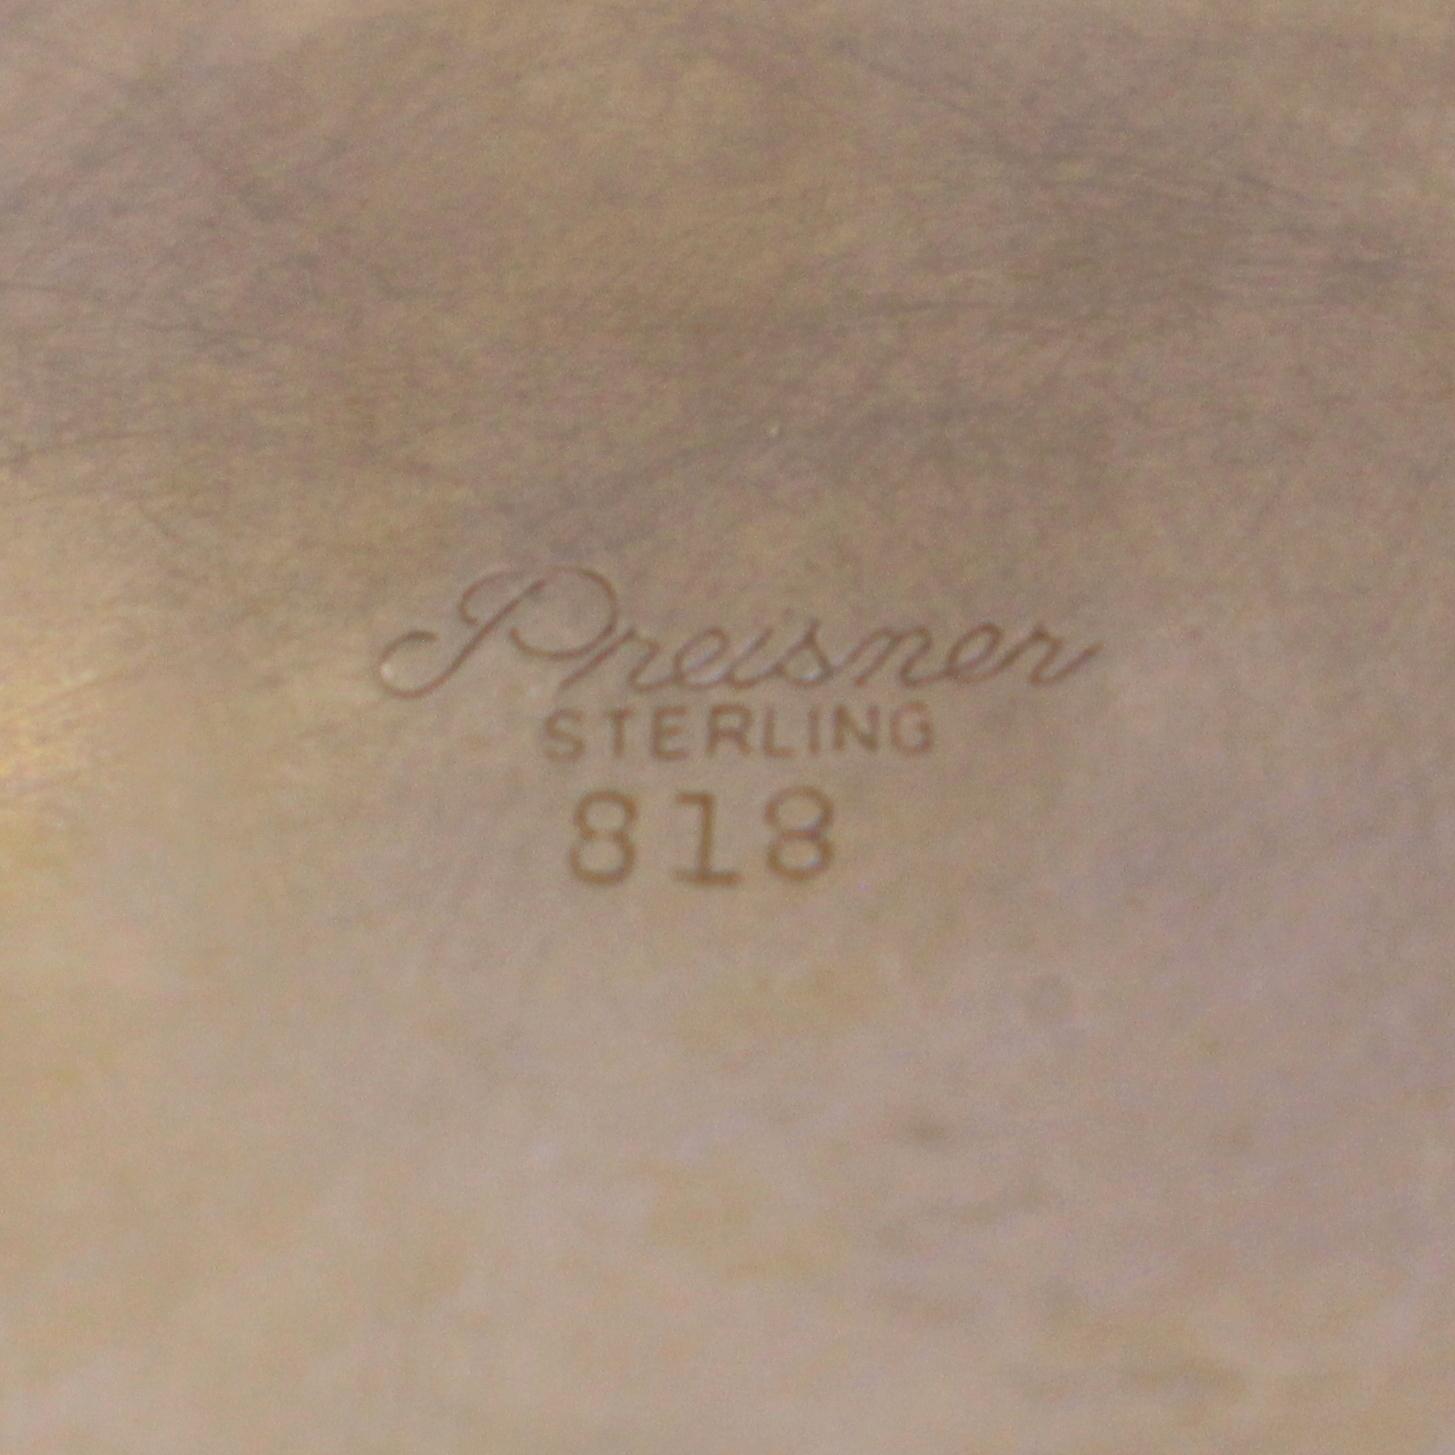 Preisner Footed Bowl Pattern 818 In .925 Sterling Silver